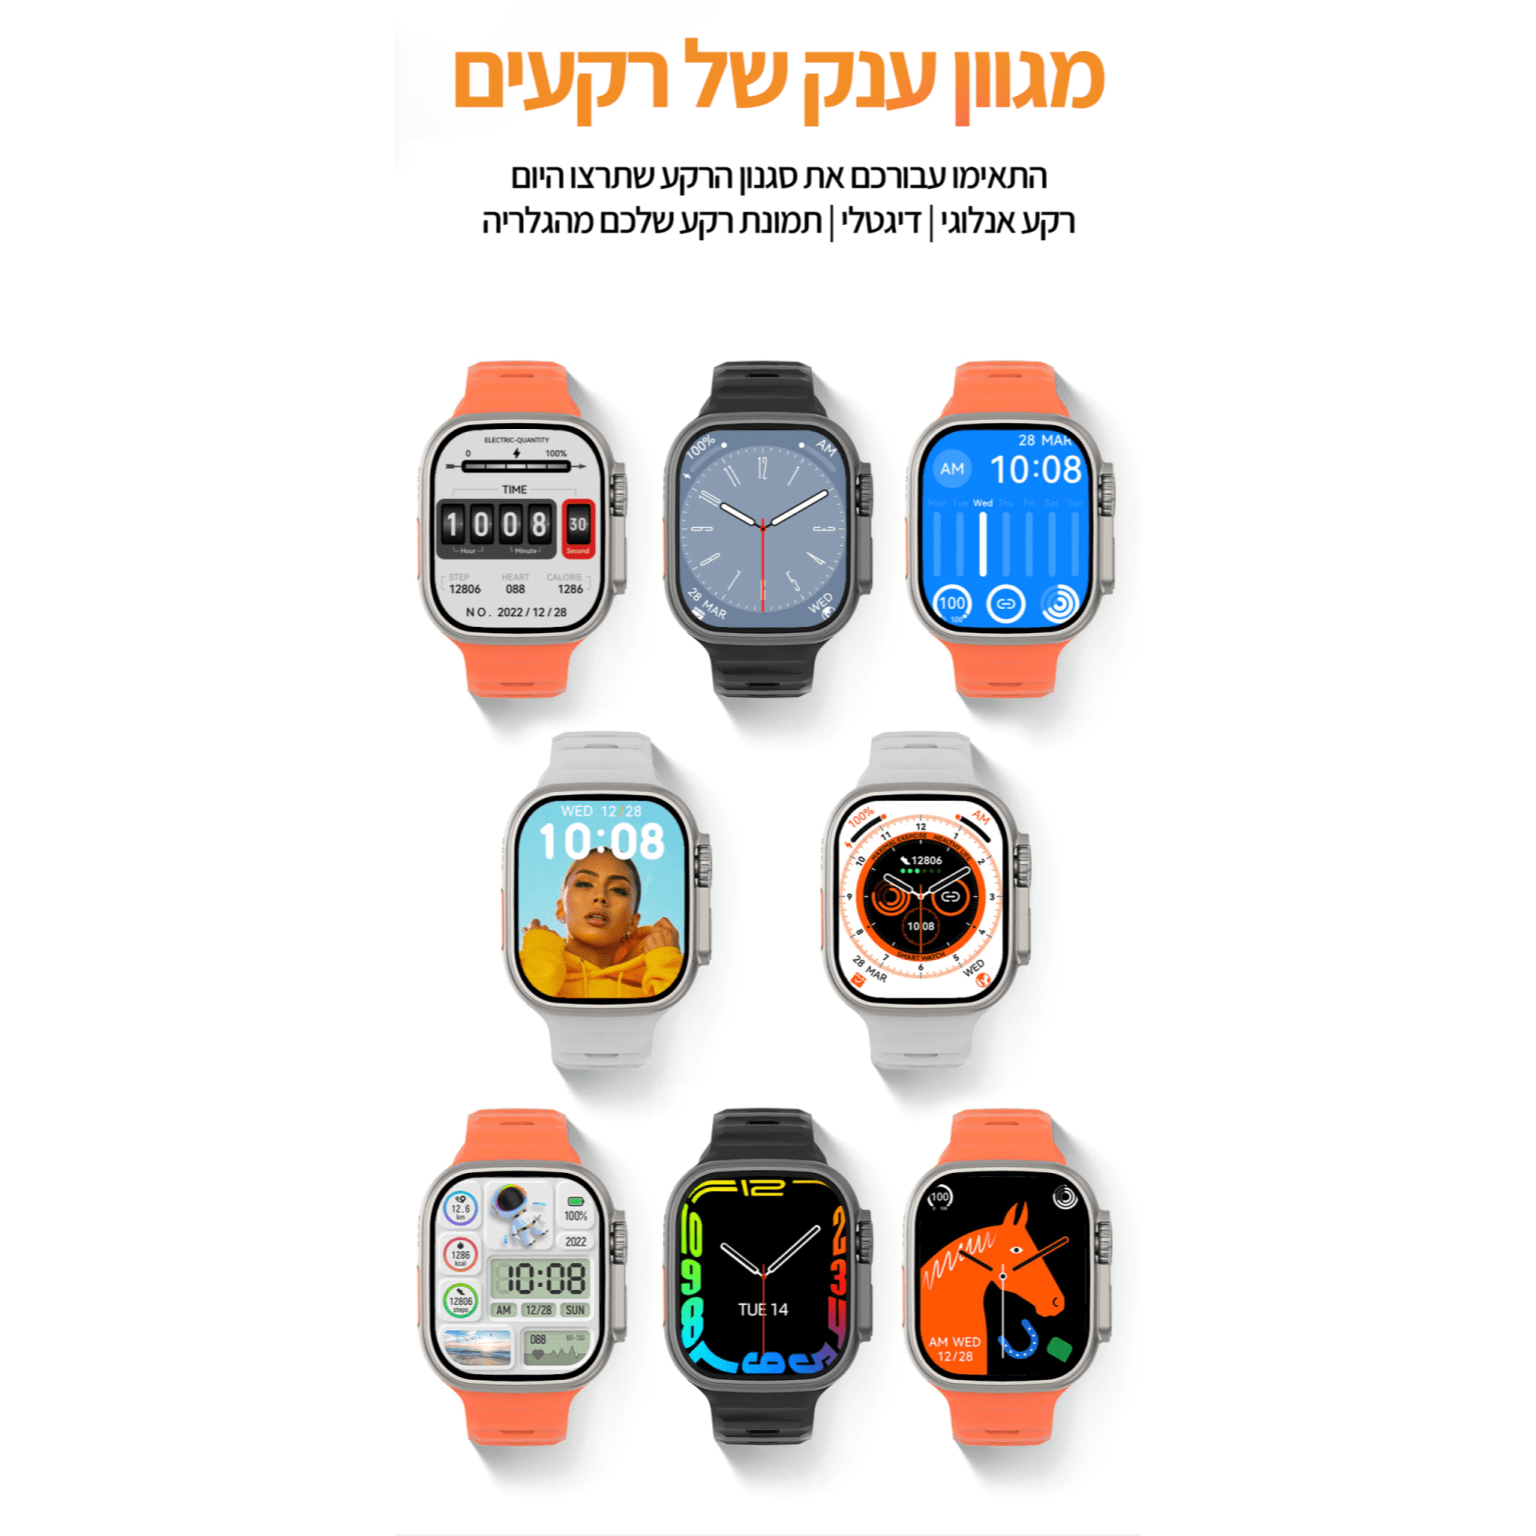 Hype Ultra Smart Watch - שעון חכם אולטרה בעברית